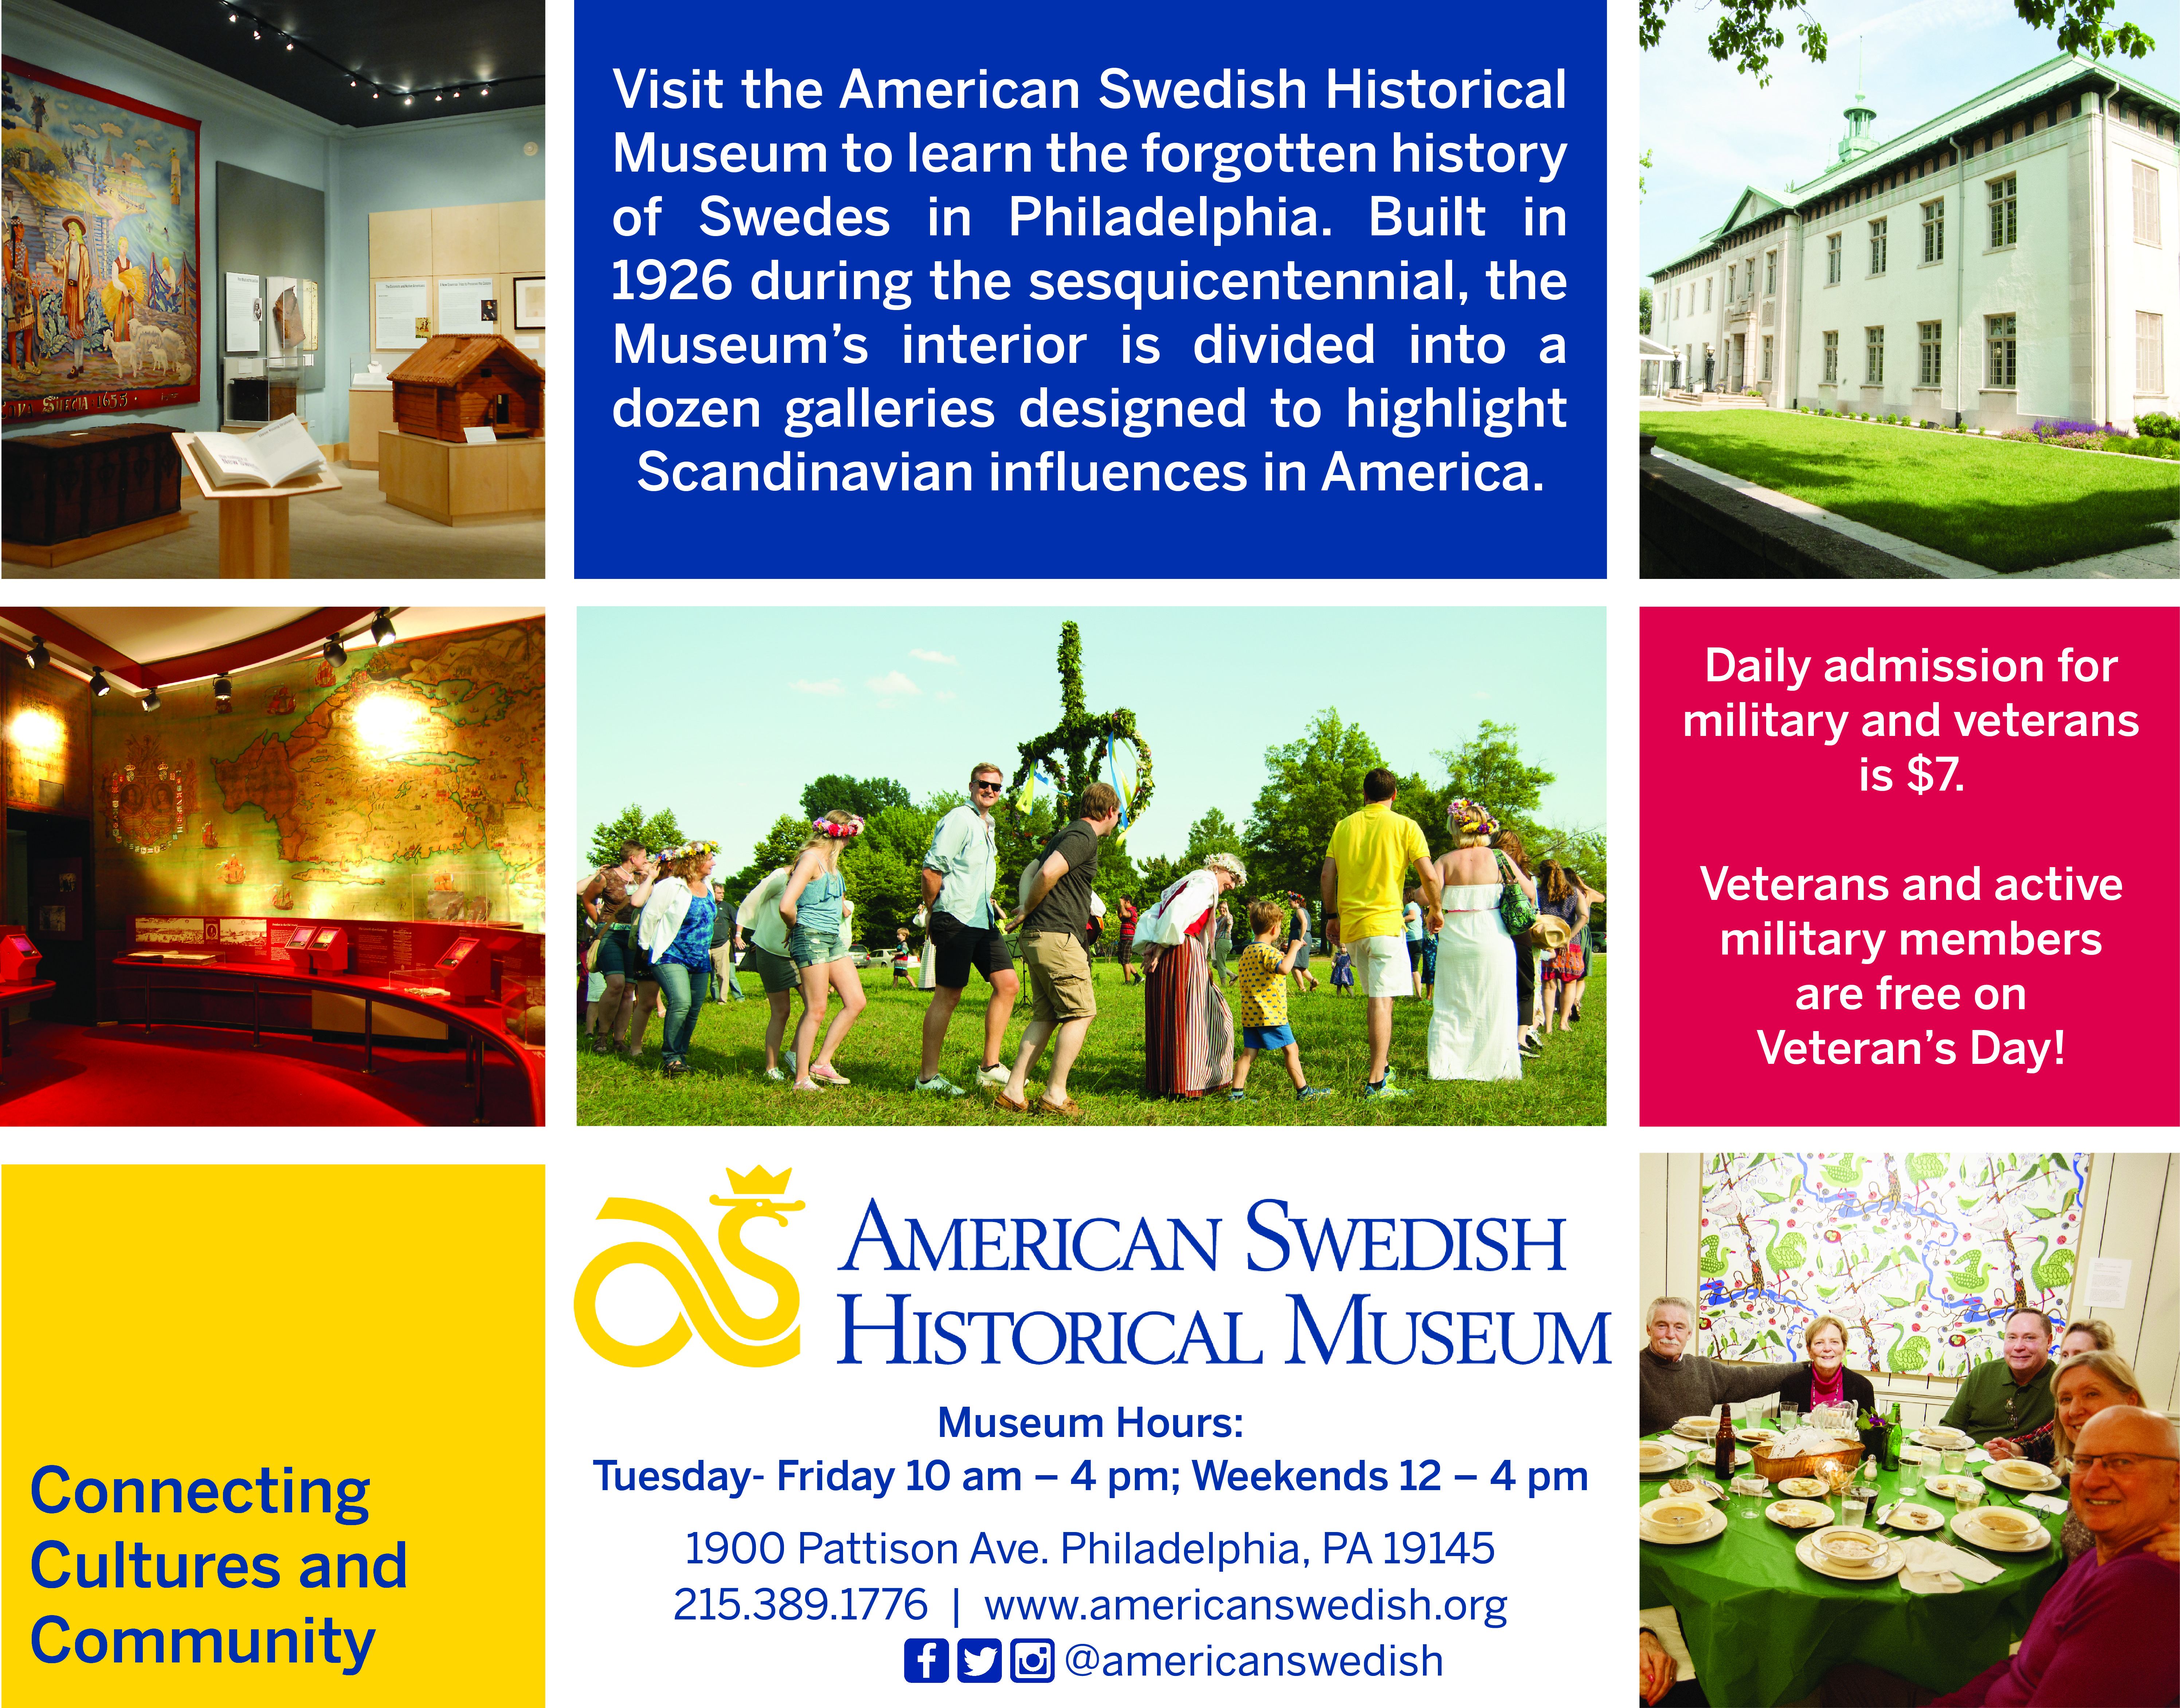 America Swedish Historical Museum